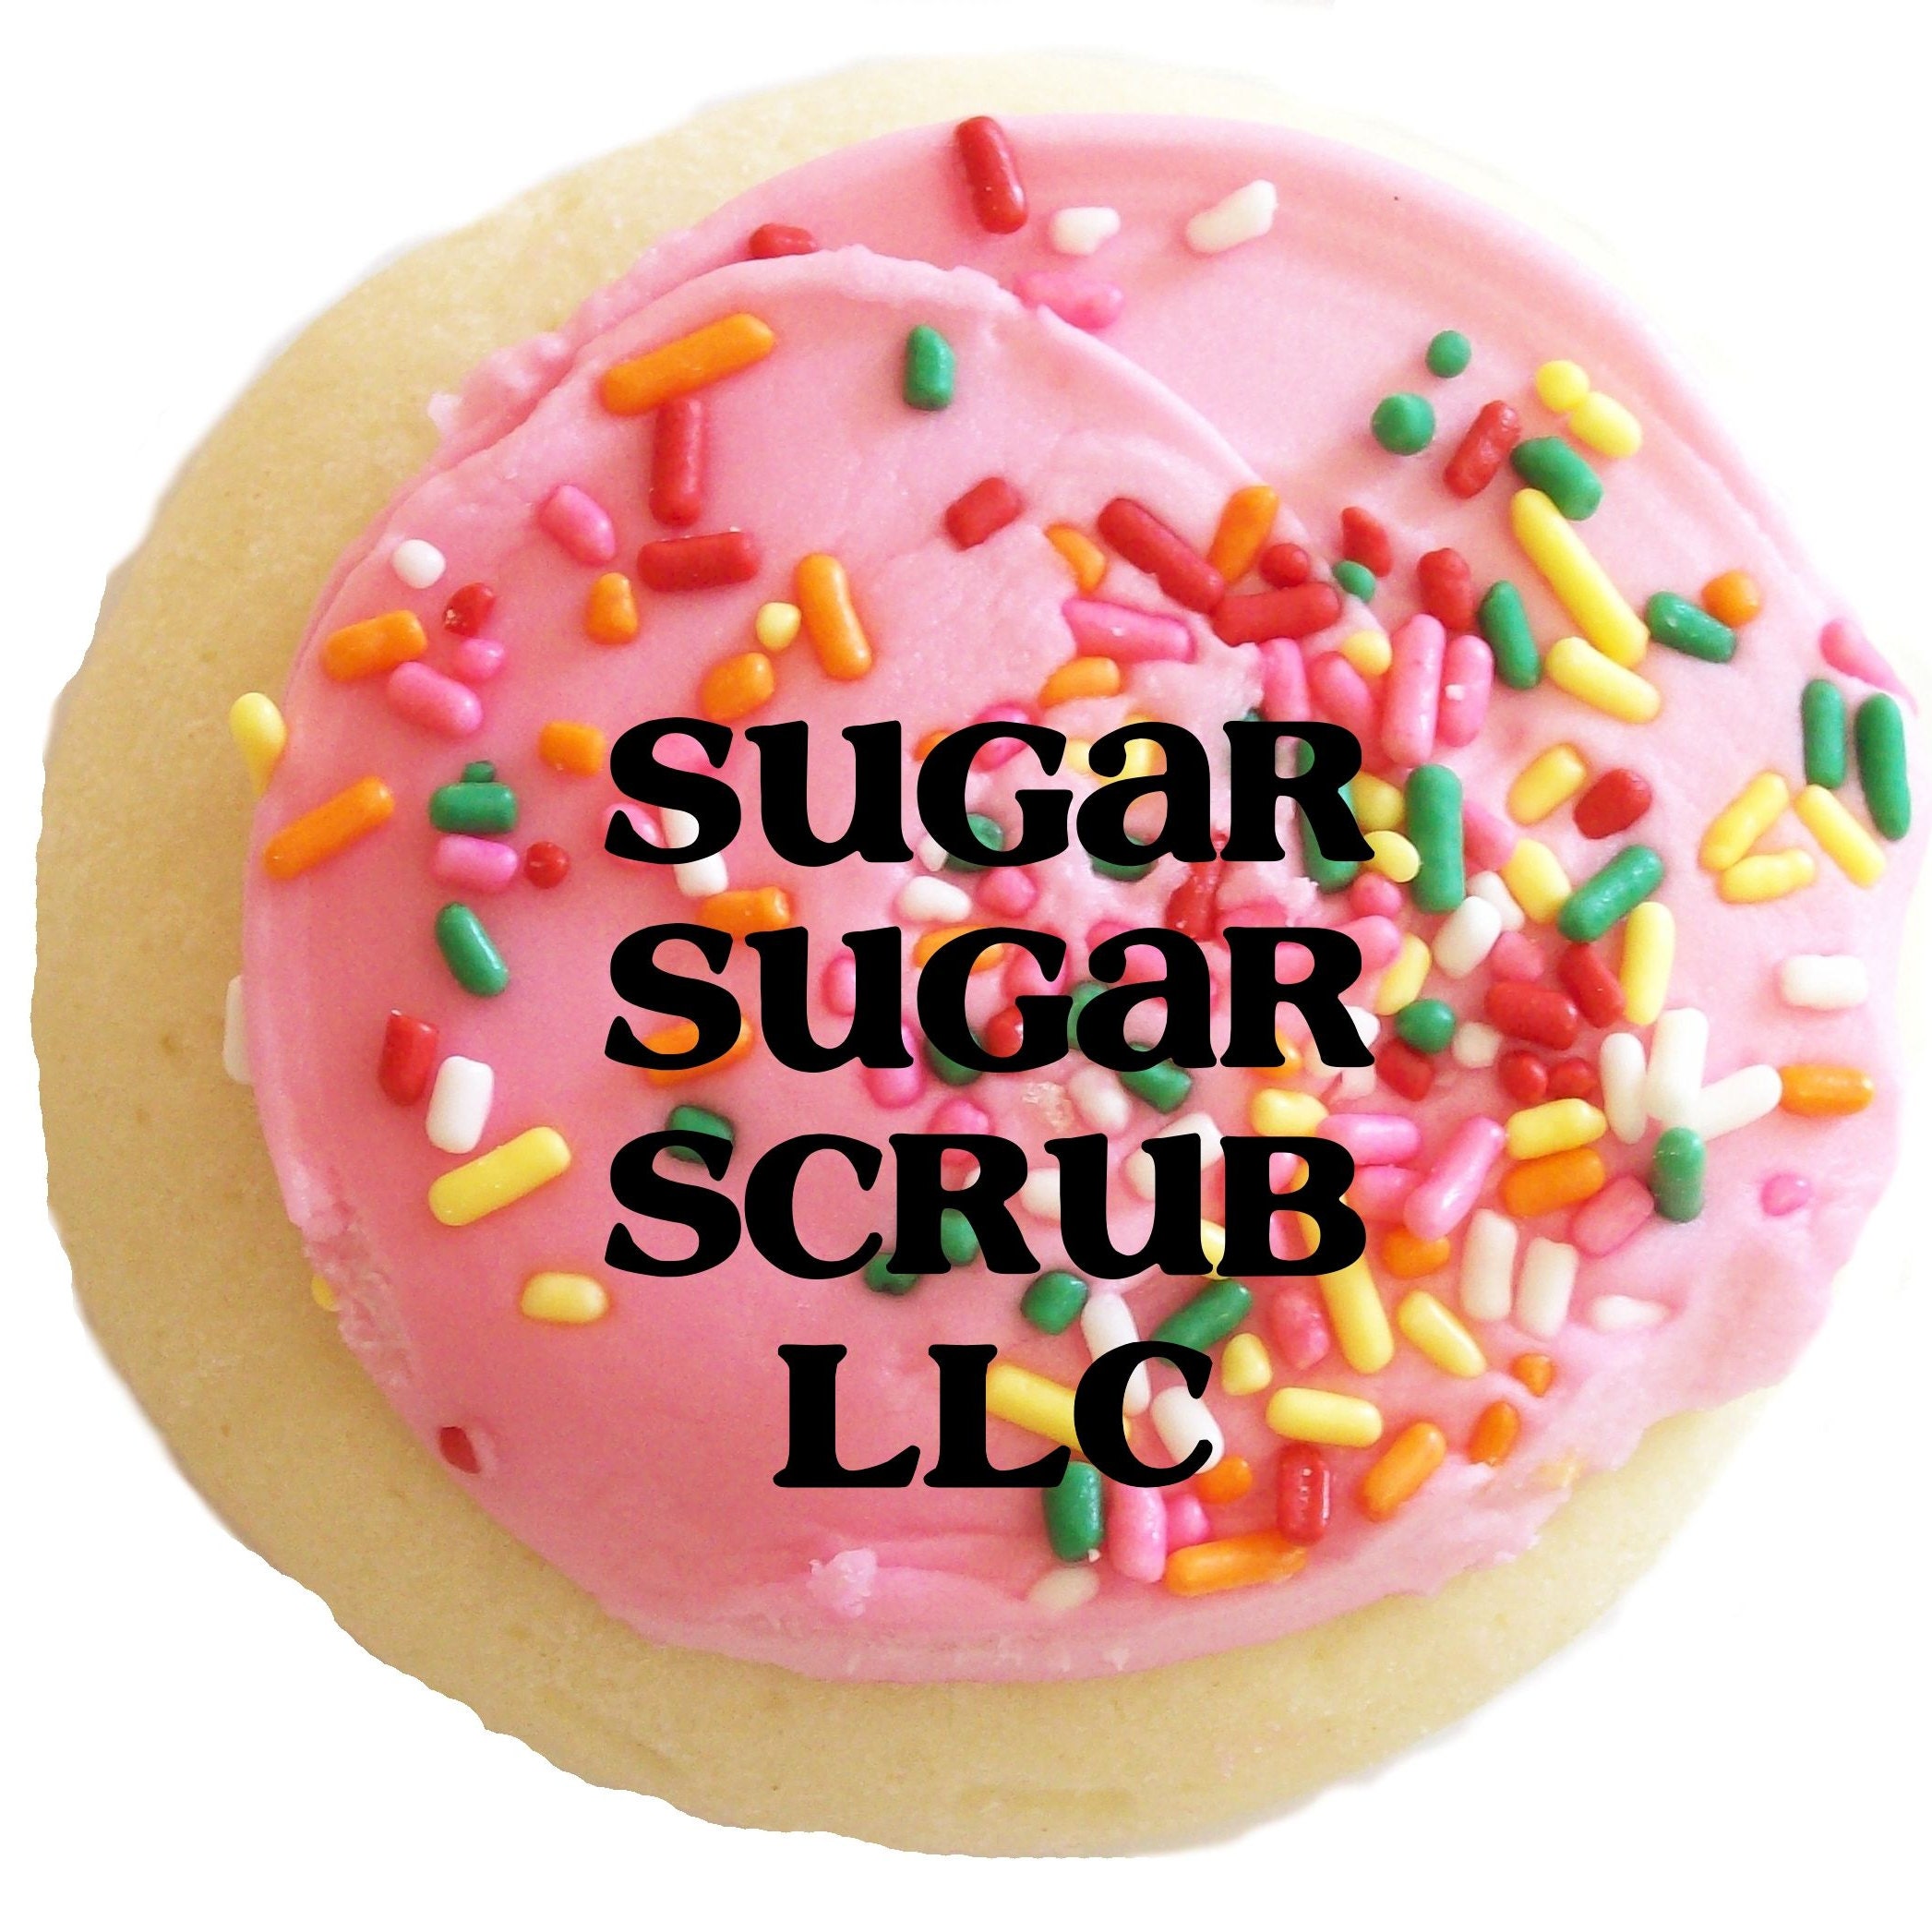 SugarSugarScrub image